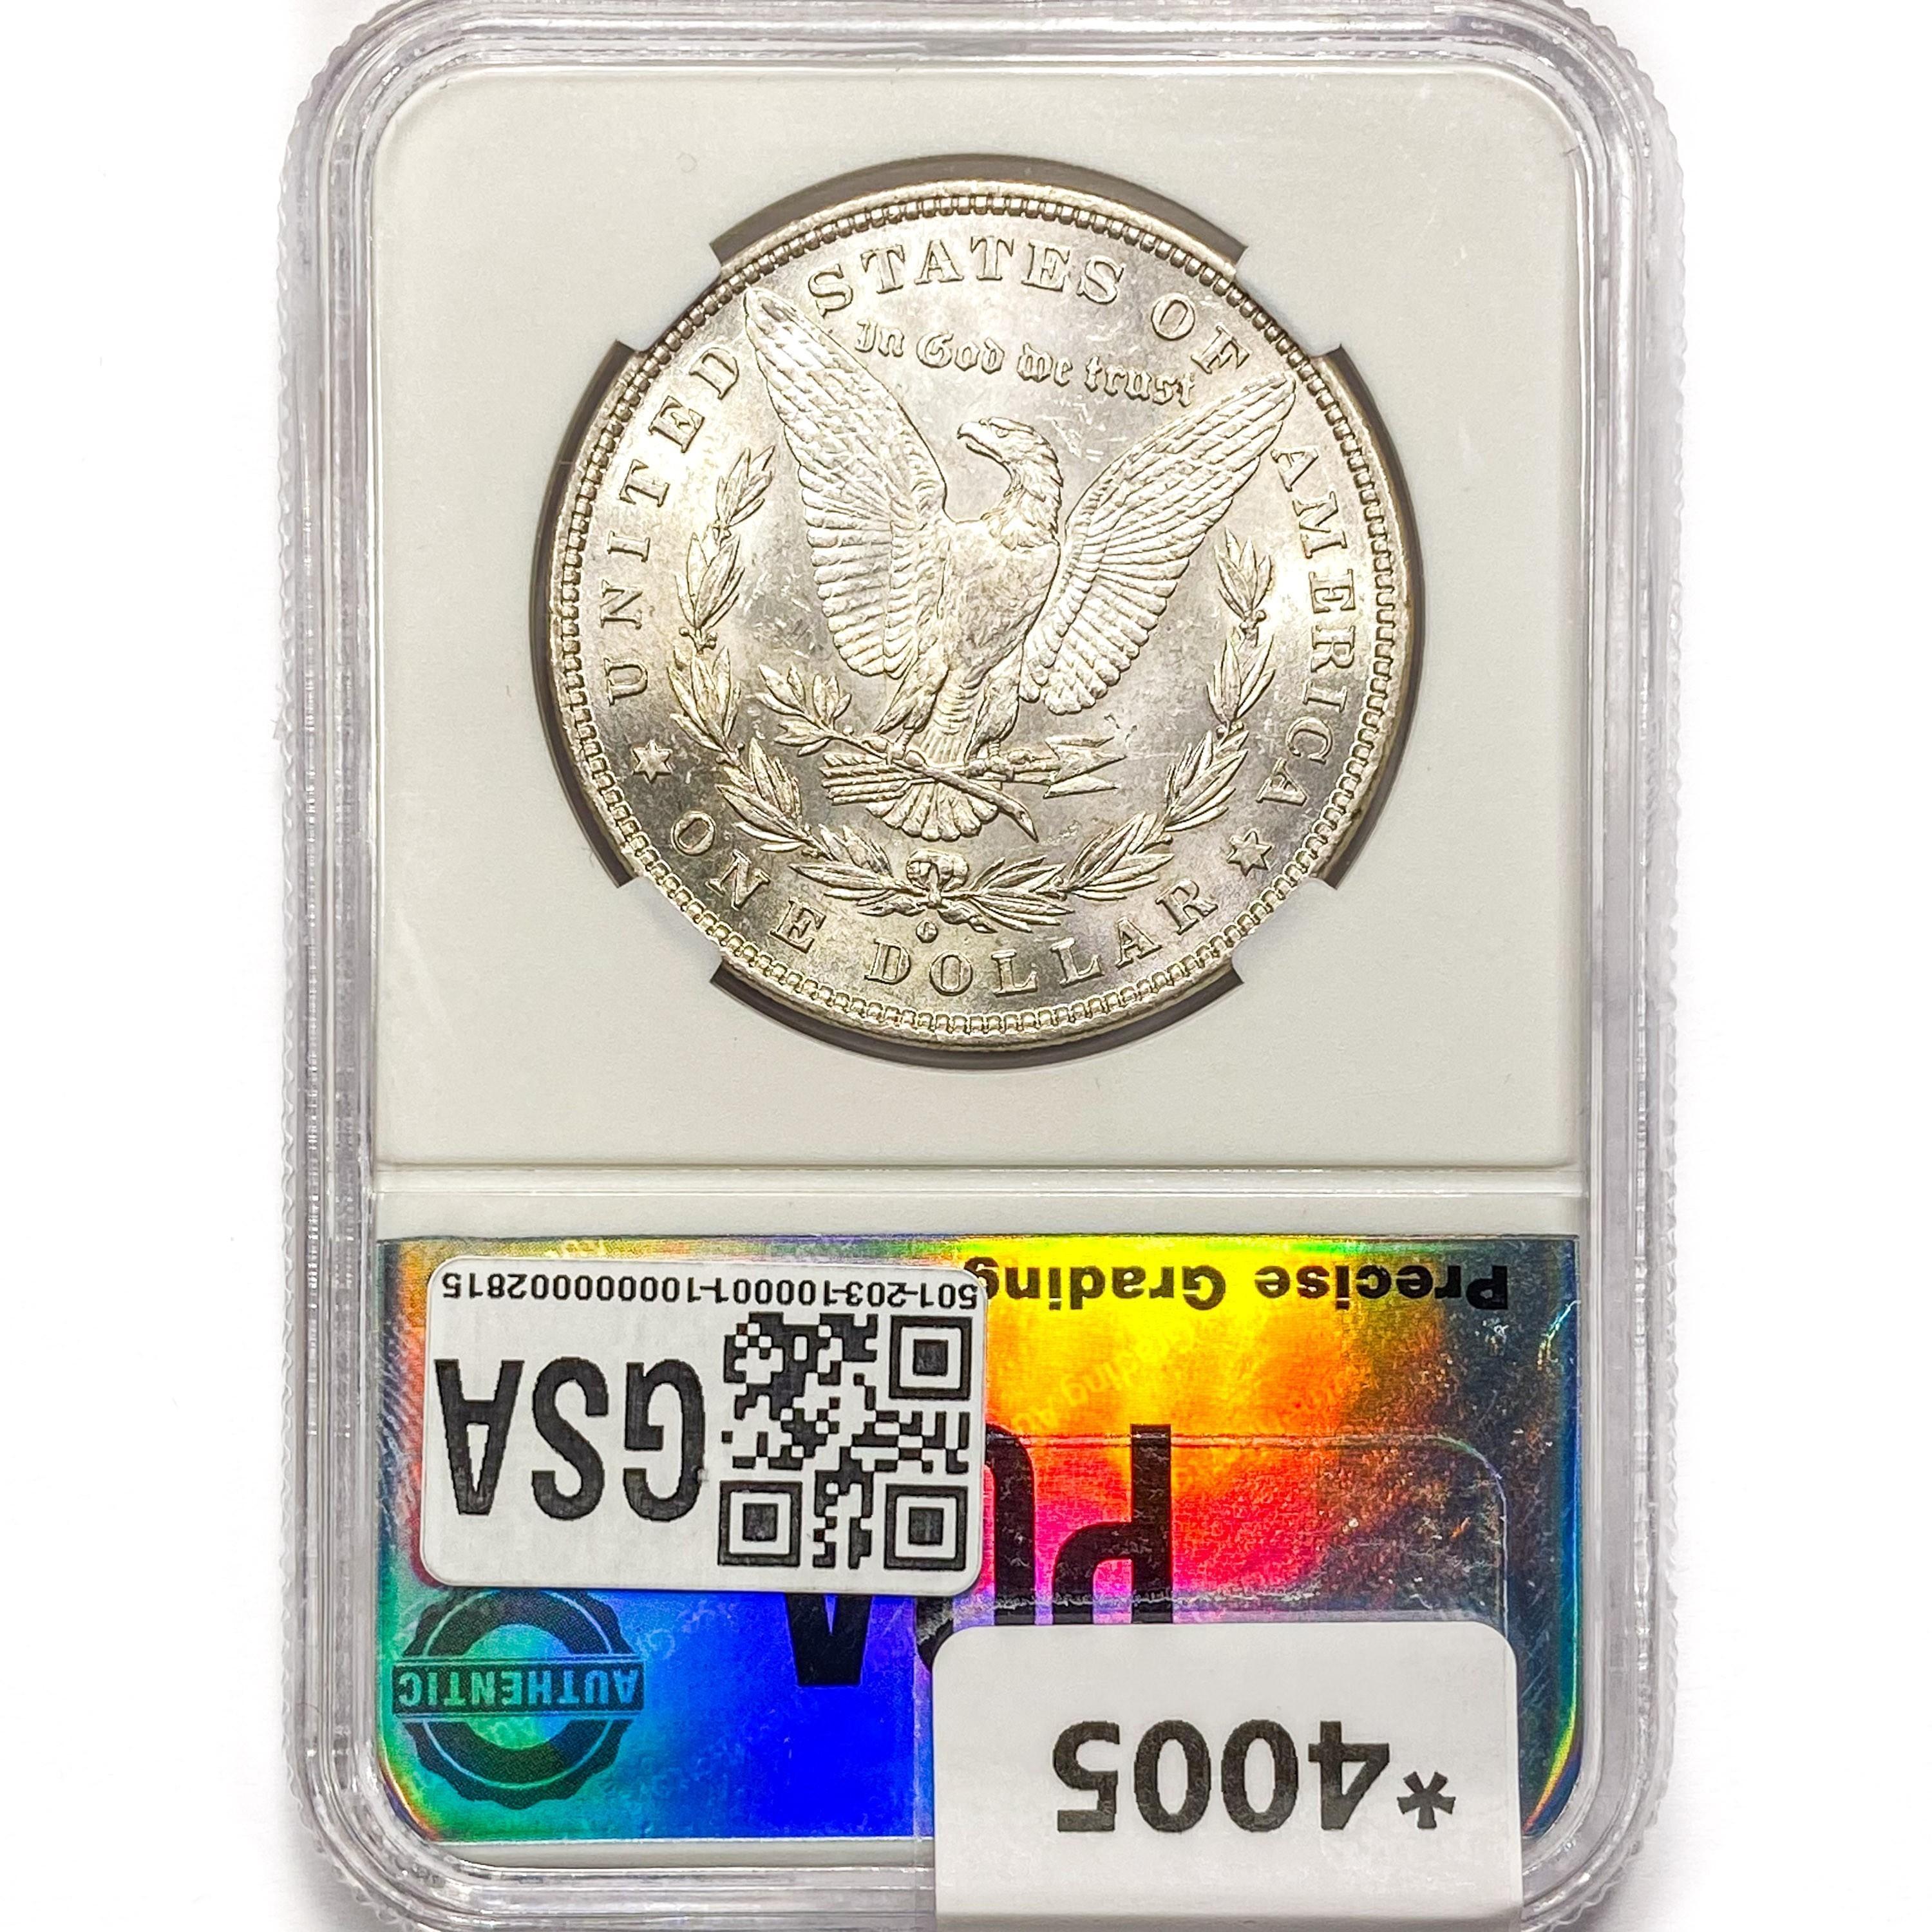 1880-O Morgan Silver Dollar PGA MS62+